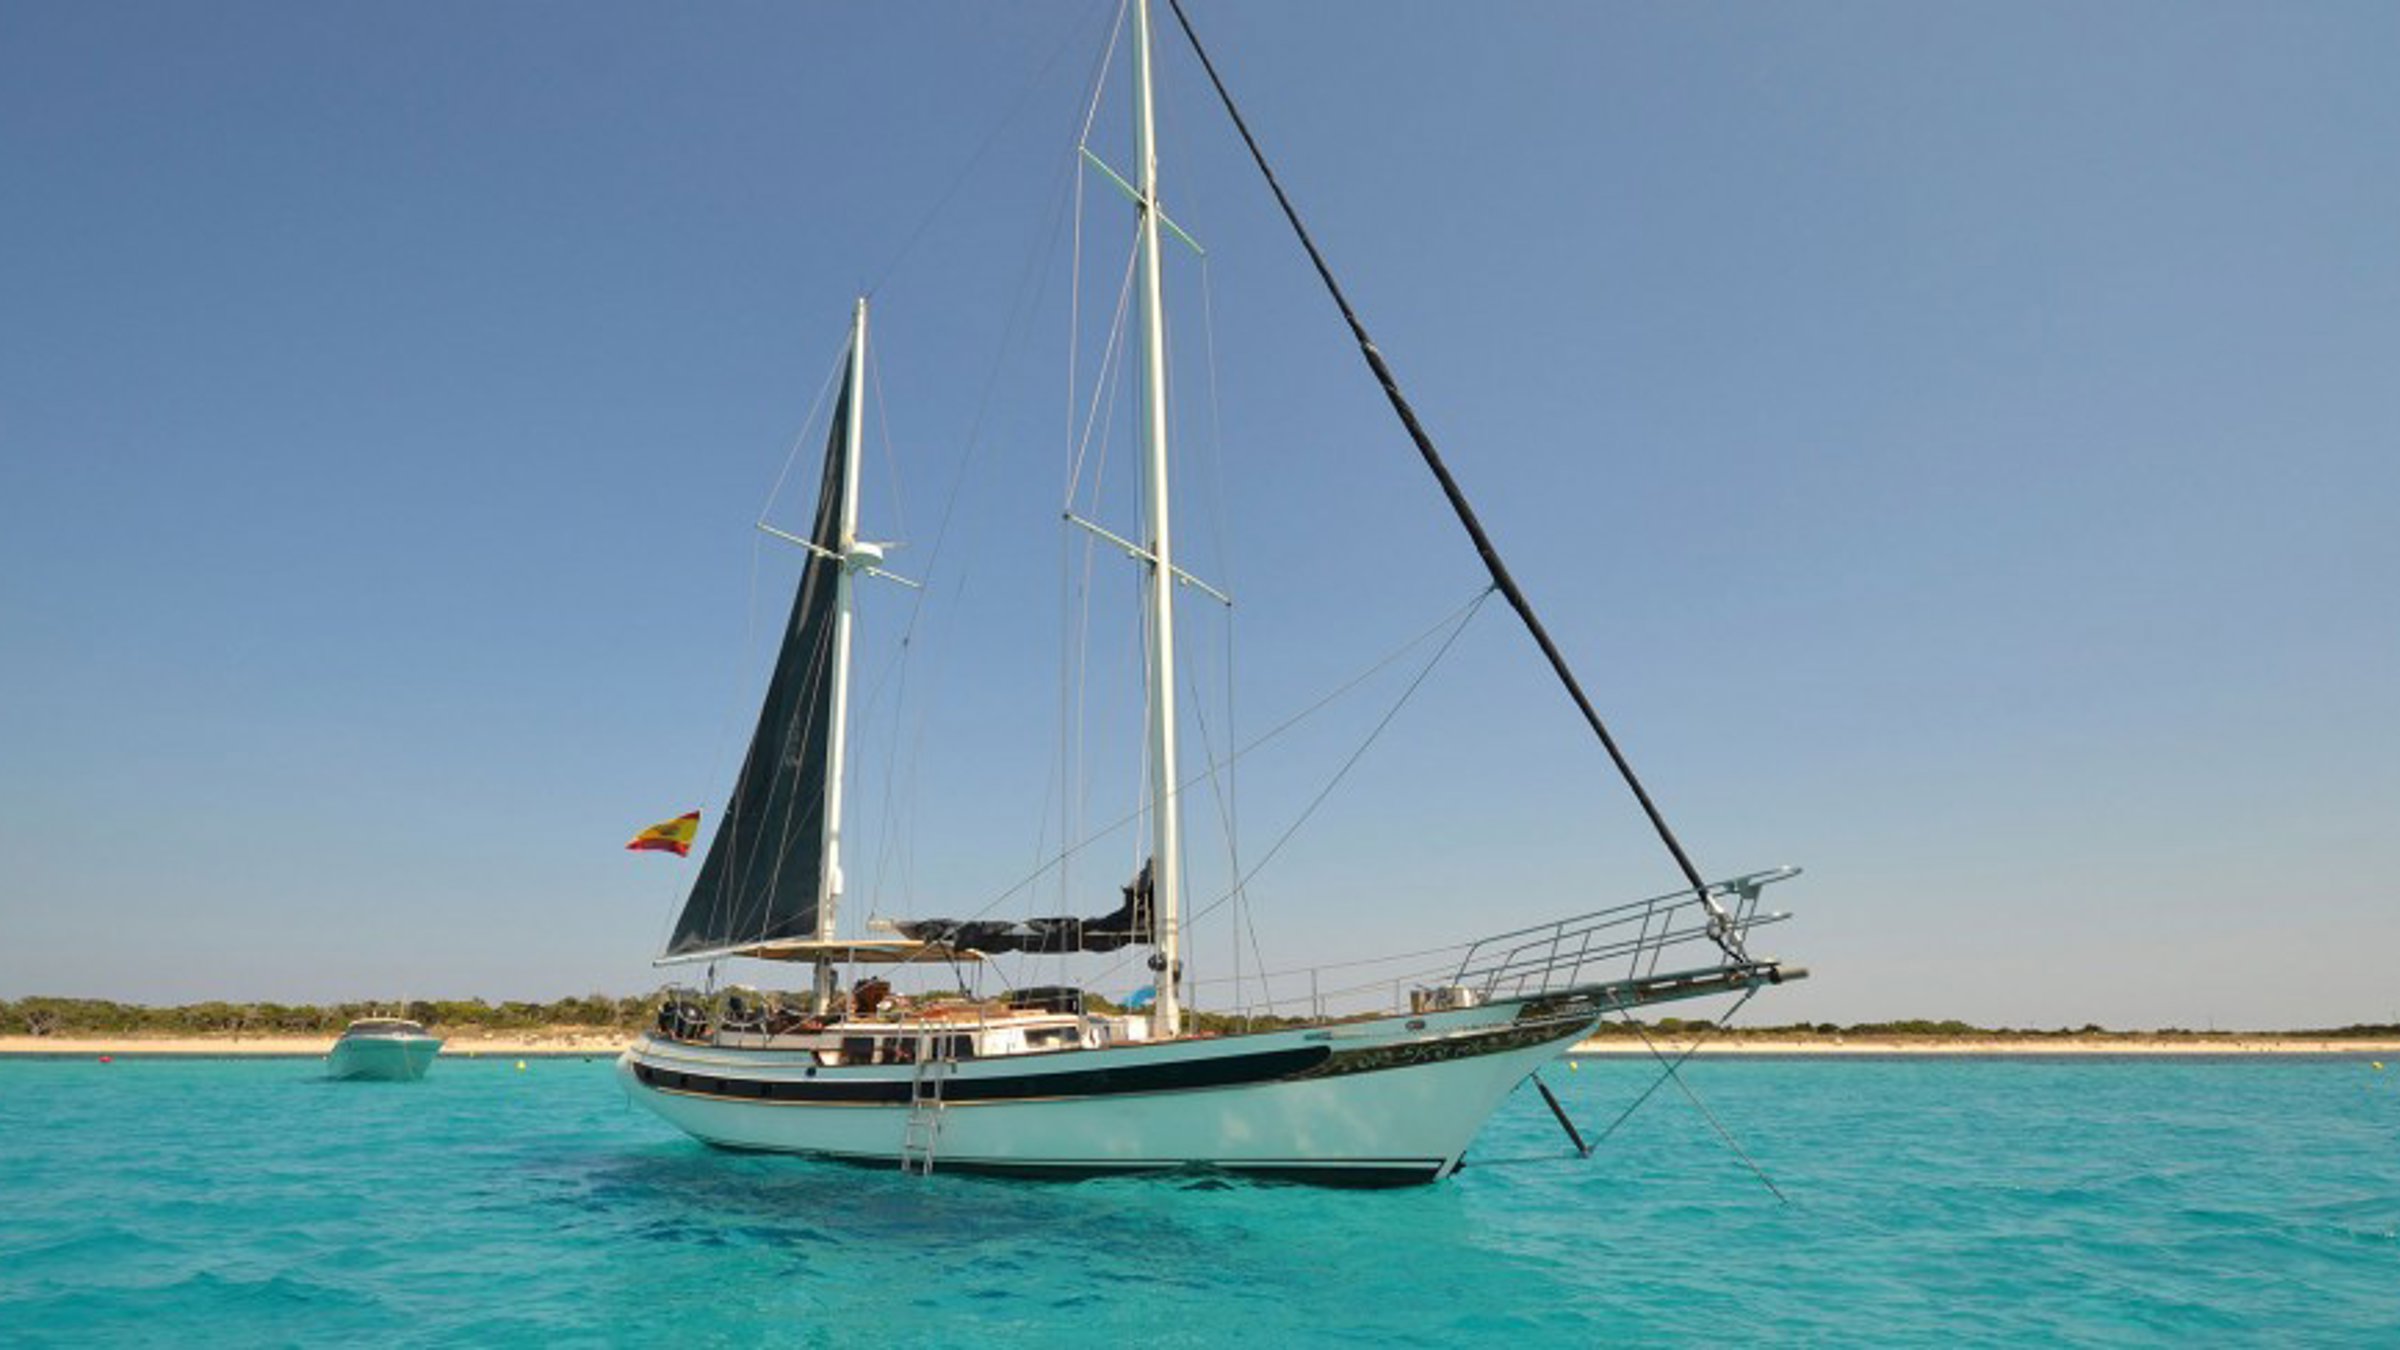 The-Boat-Charter-Company-Ibiza-Sailboat-Geisha-3-1-1024x488